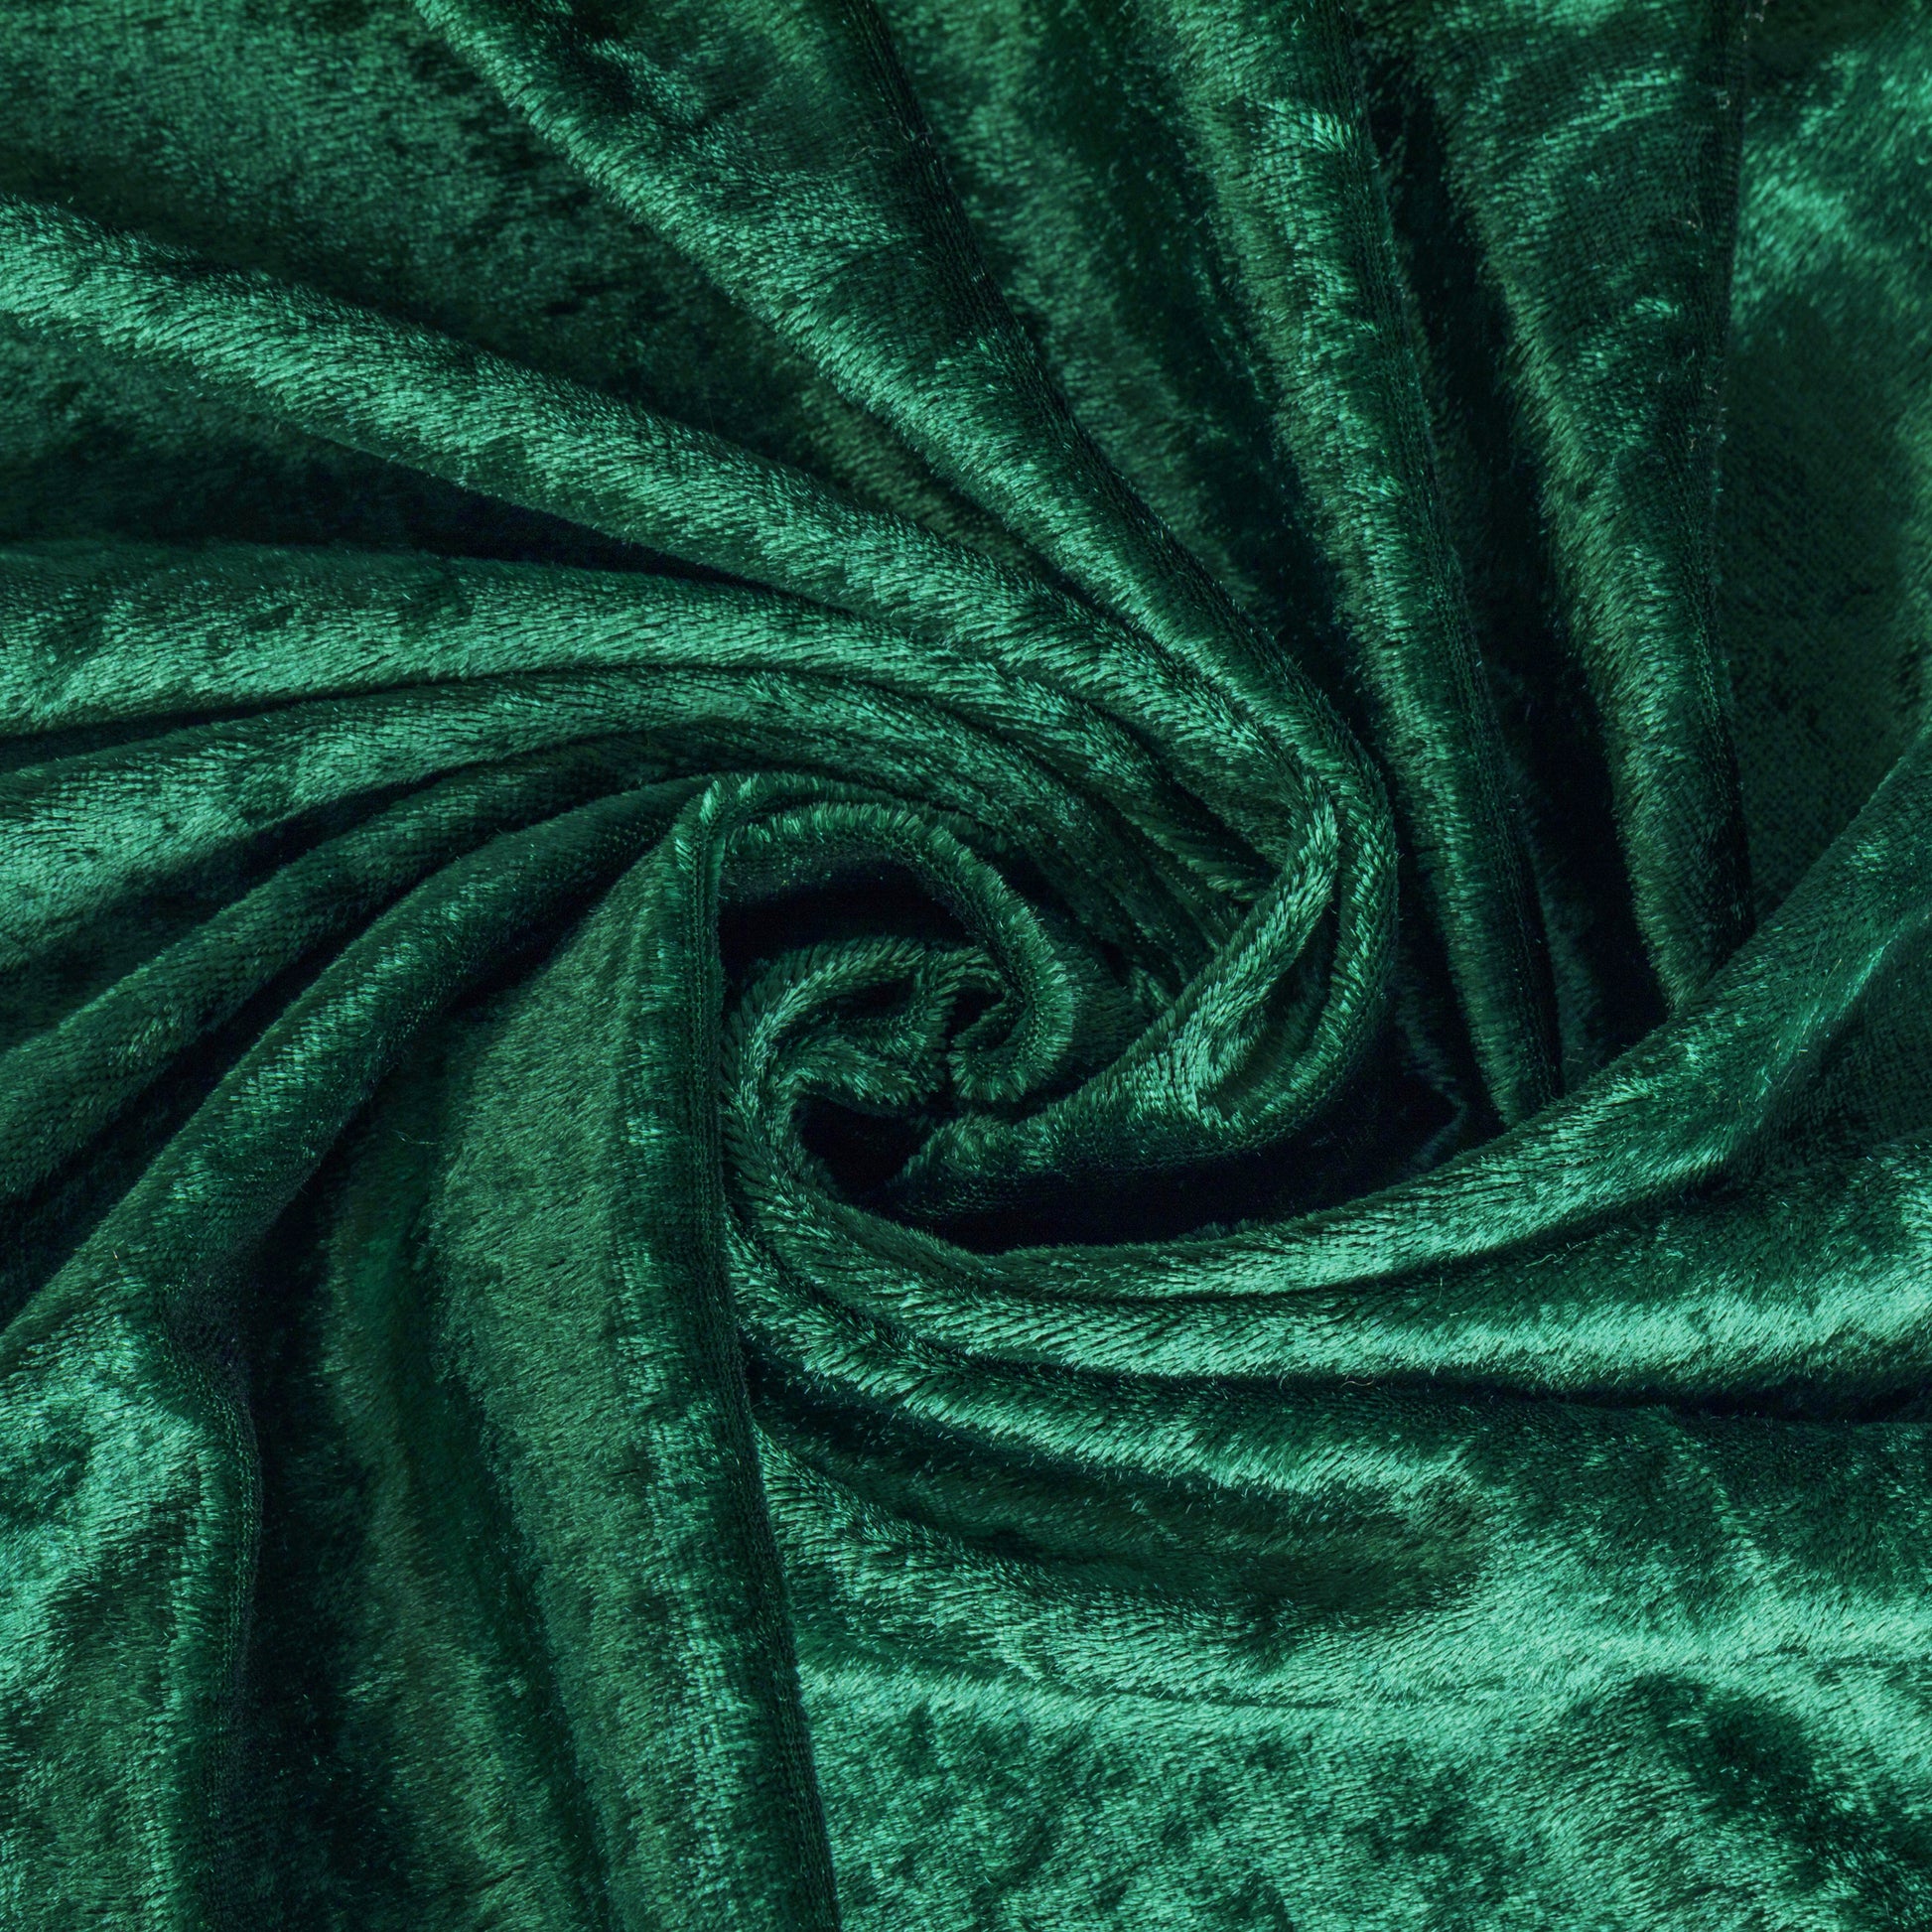 Dark Green Evergreen Hunter Poly/cotton Broadcloth Dress Fabric 